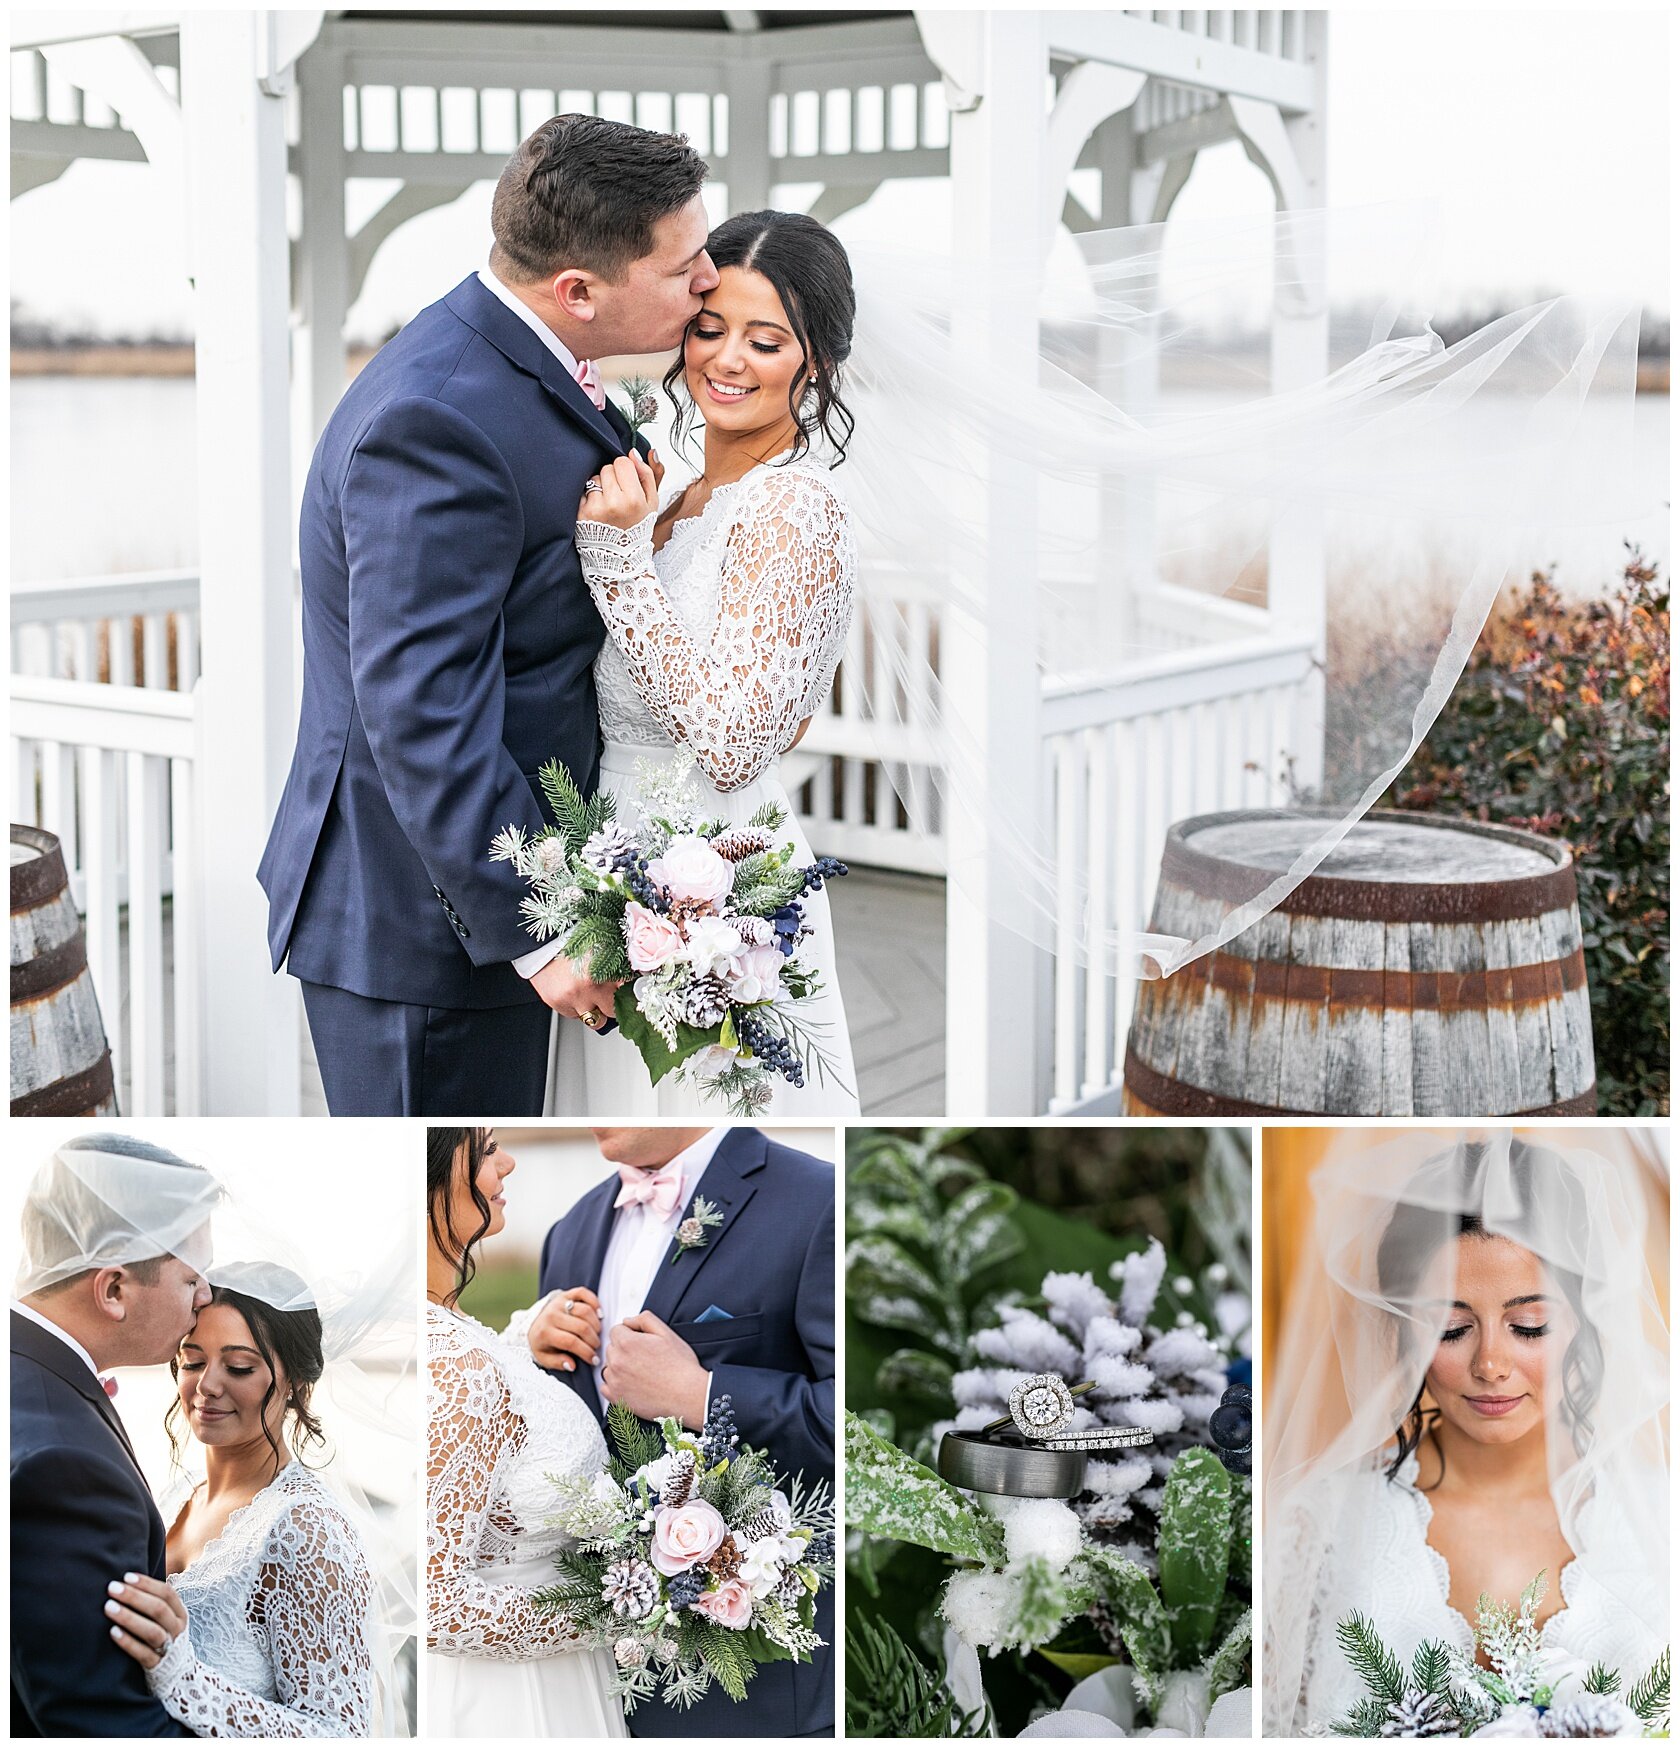 Allison James Thousand Acre Farm Wedding Dec 2019 Living Radiant Photography_header.jpg